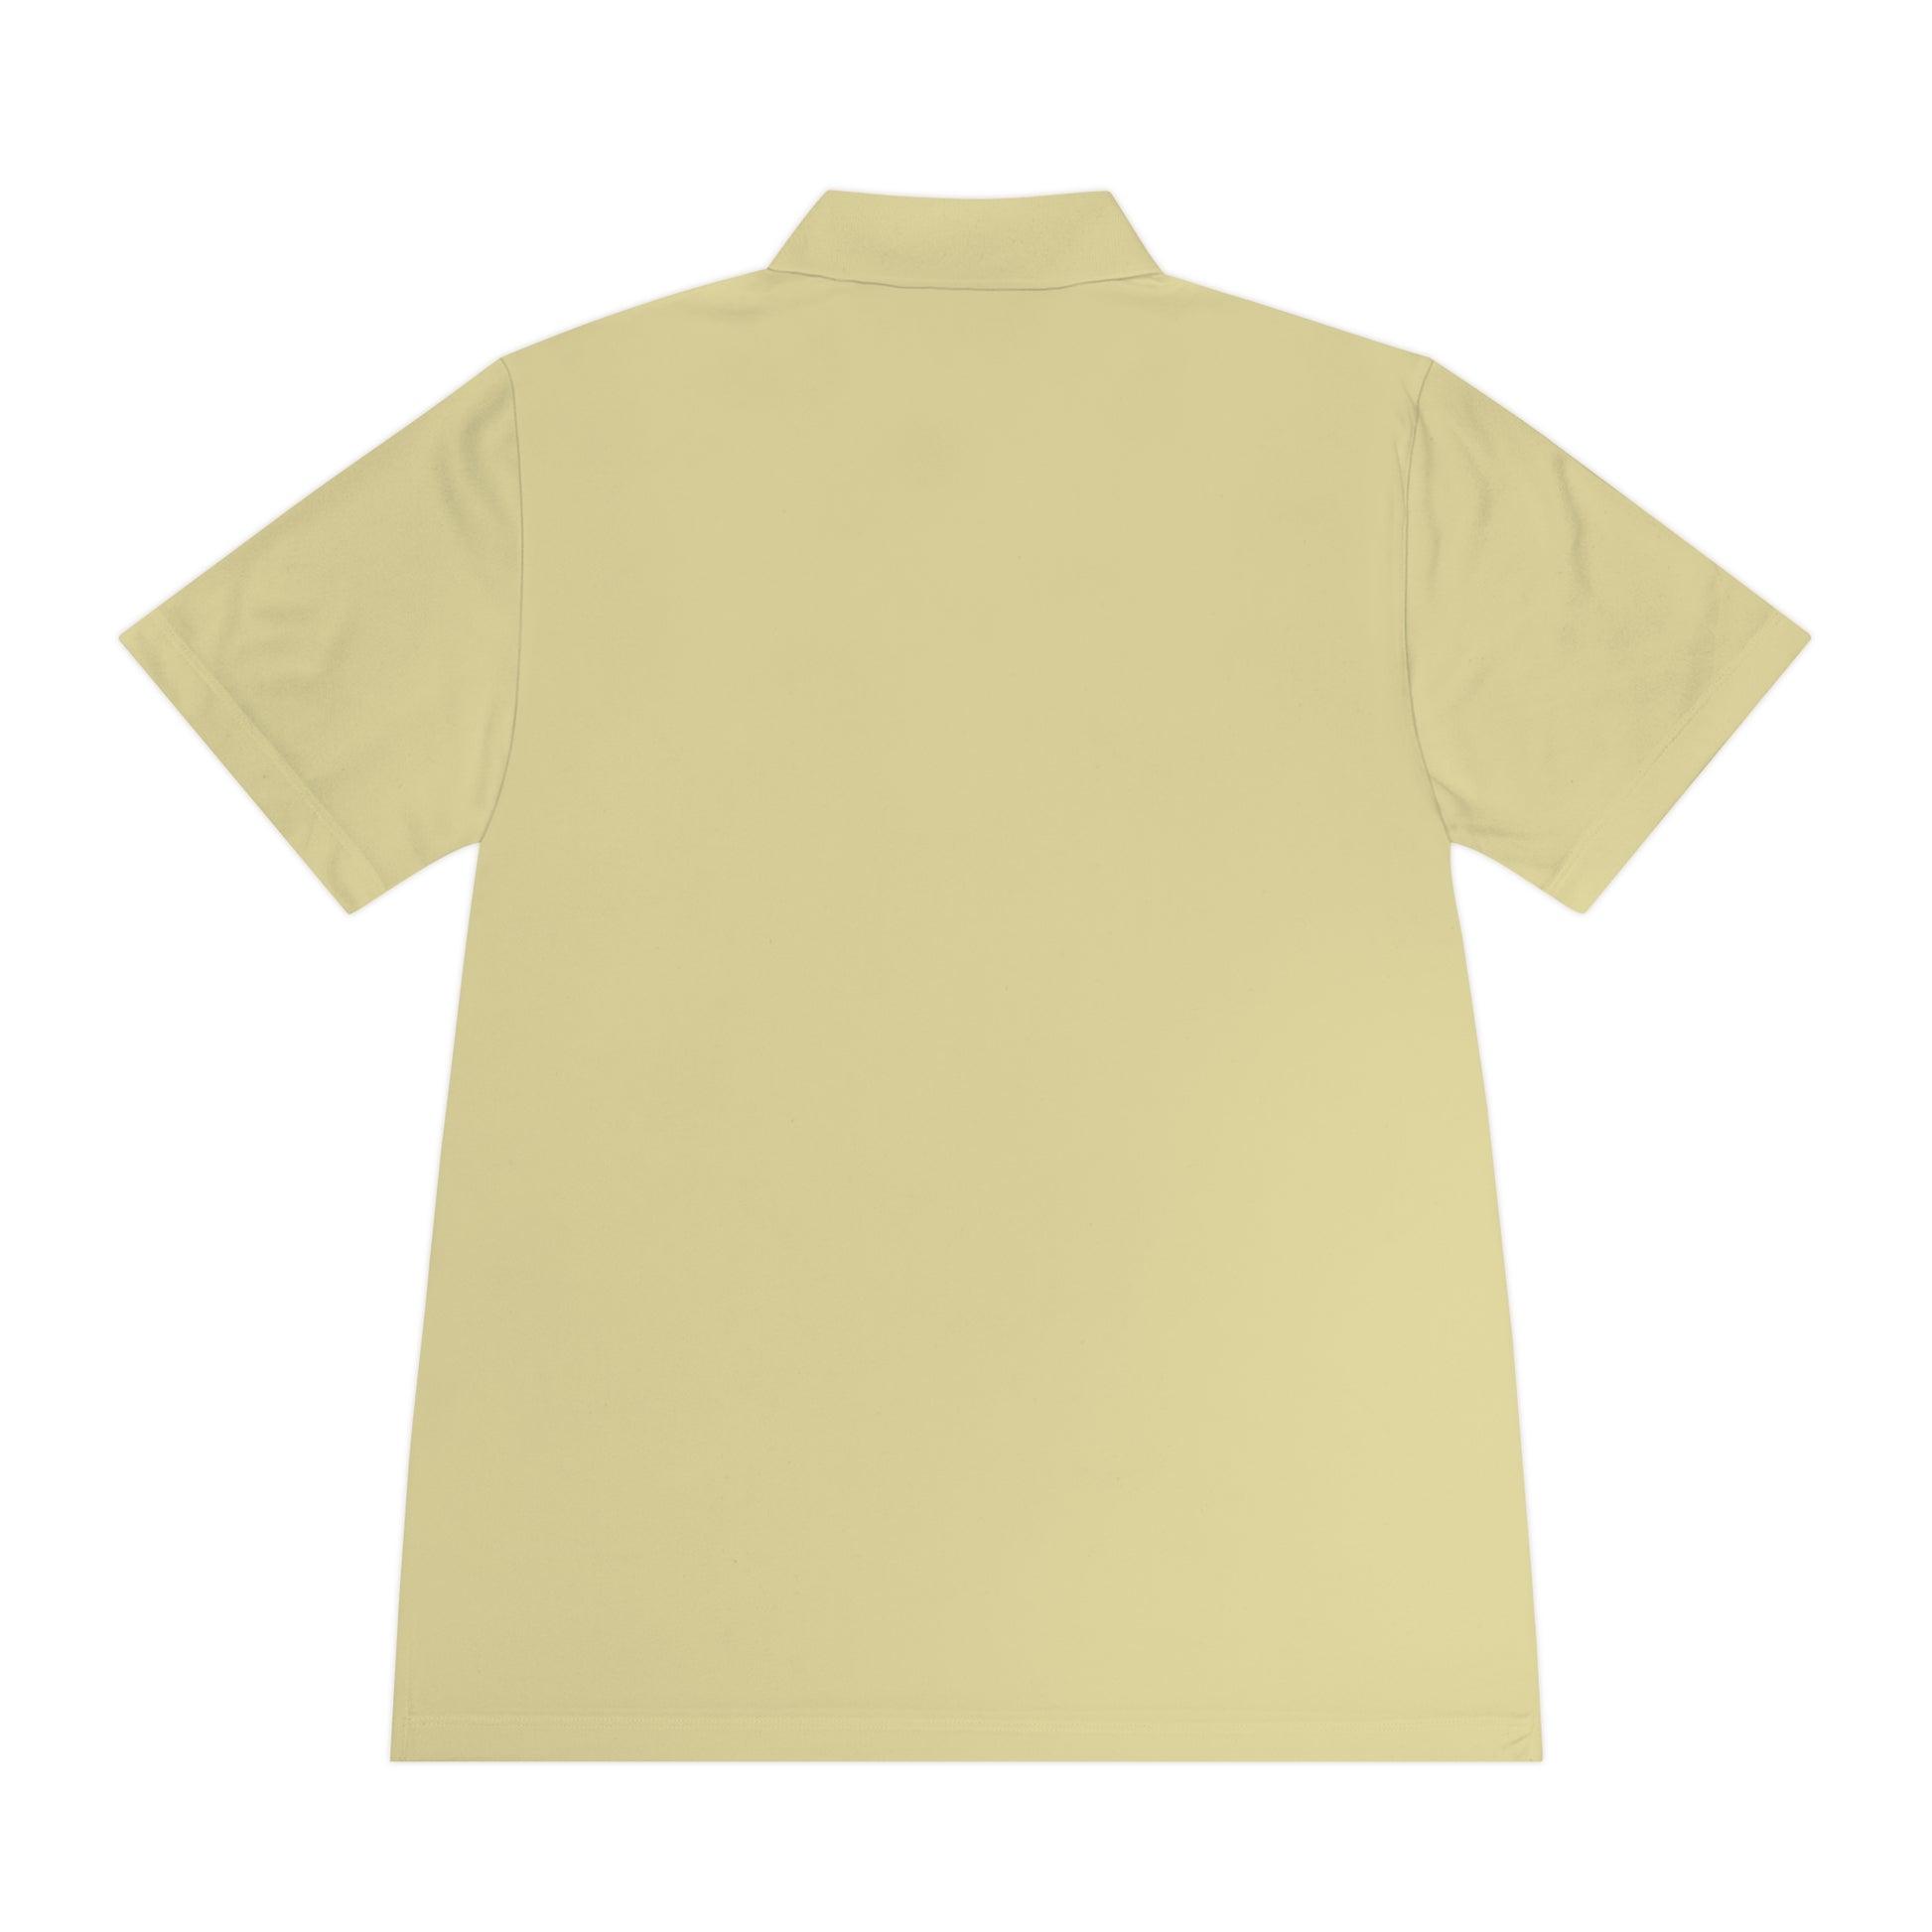 Hillside Men's Sport Polo Shirt - Posterify